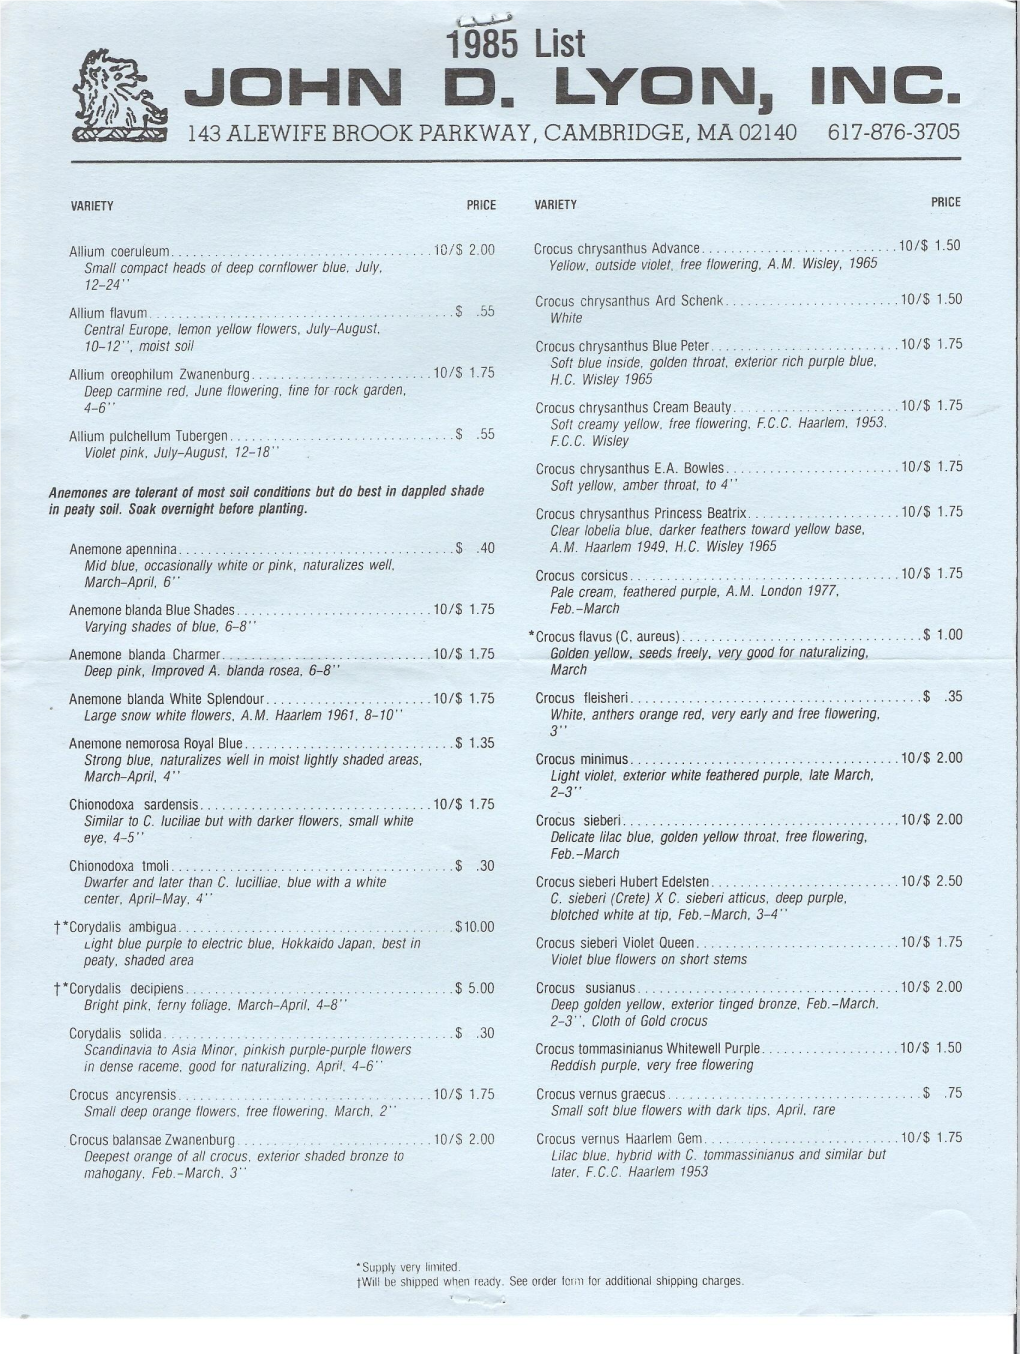 John D. Lyon, Inc. 1985 Species Bulb List